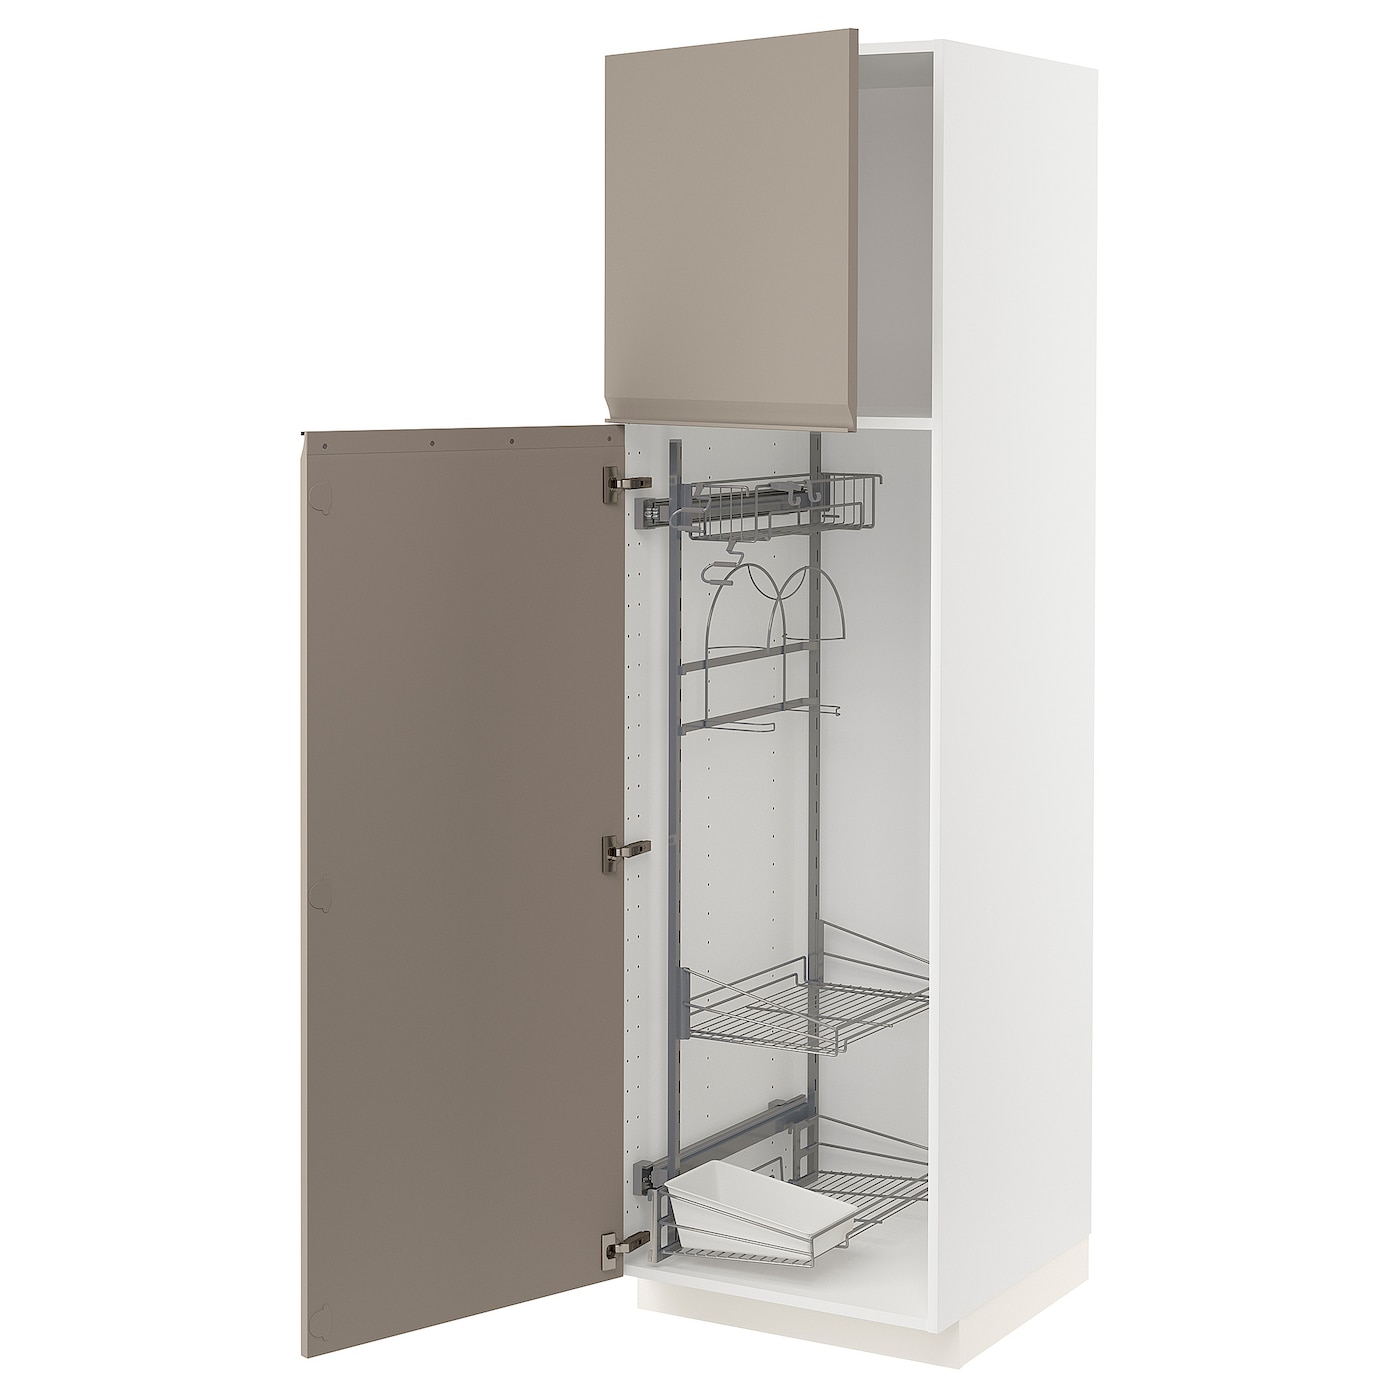 Высокий шкаф/бытовой - IKEA METOD/МЕТОД ИКЕА, 60х60х200 см, бежевый/белый